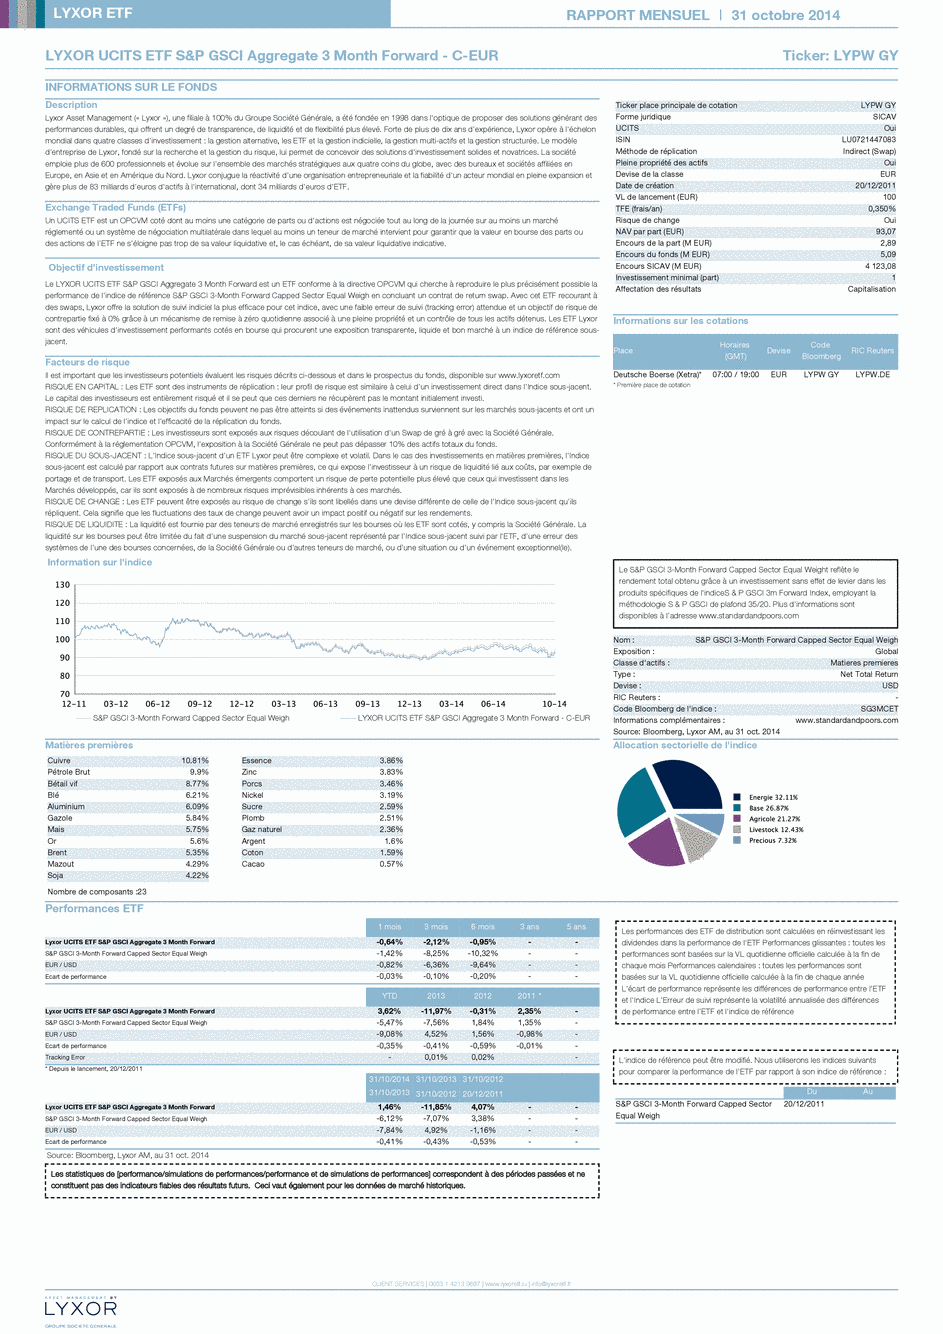 Reporting LYXOR UCITS ETF S&P GSCI Aggregate 3 Month Forward - C-EUR - 31/10/2014 - Français